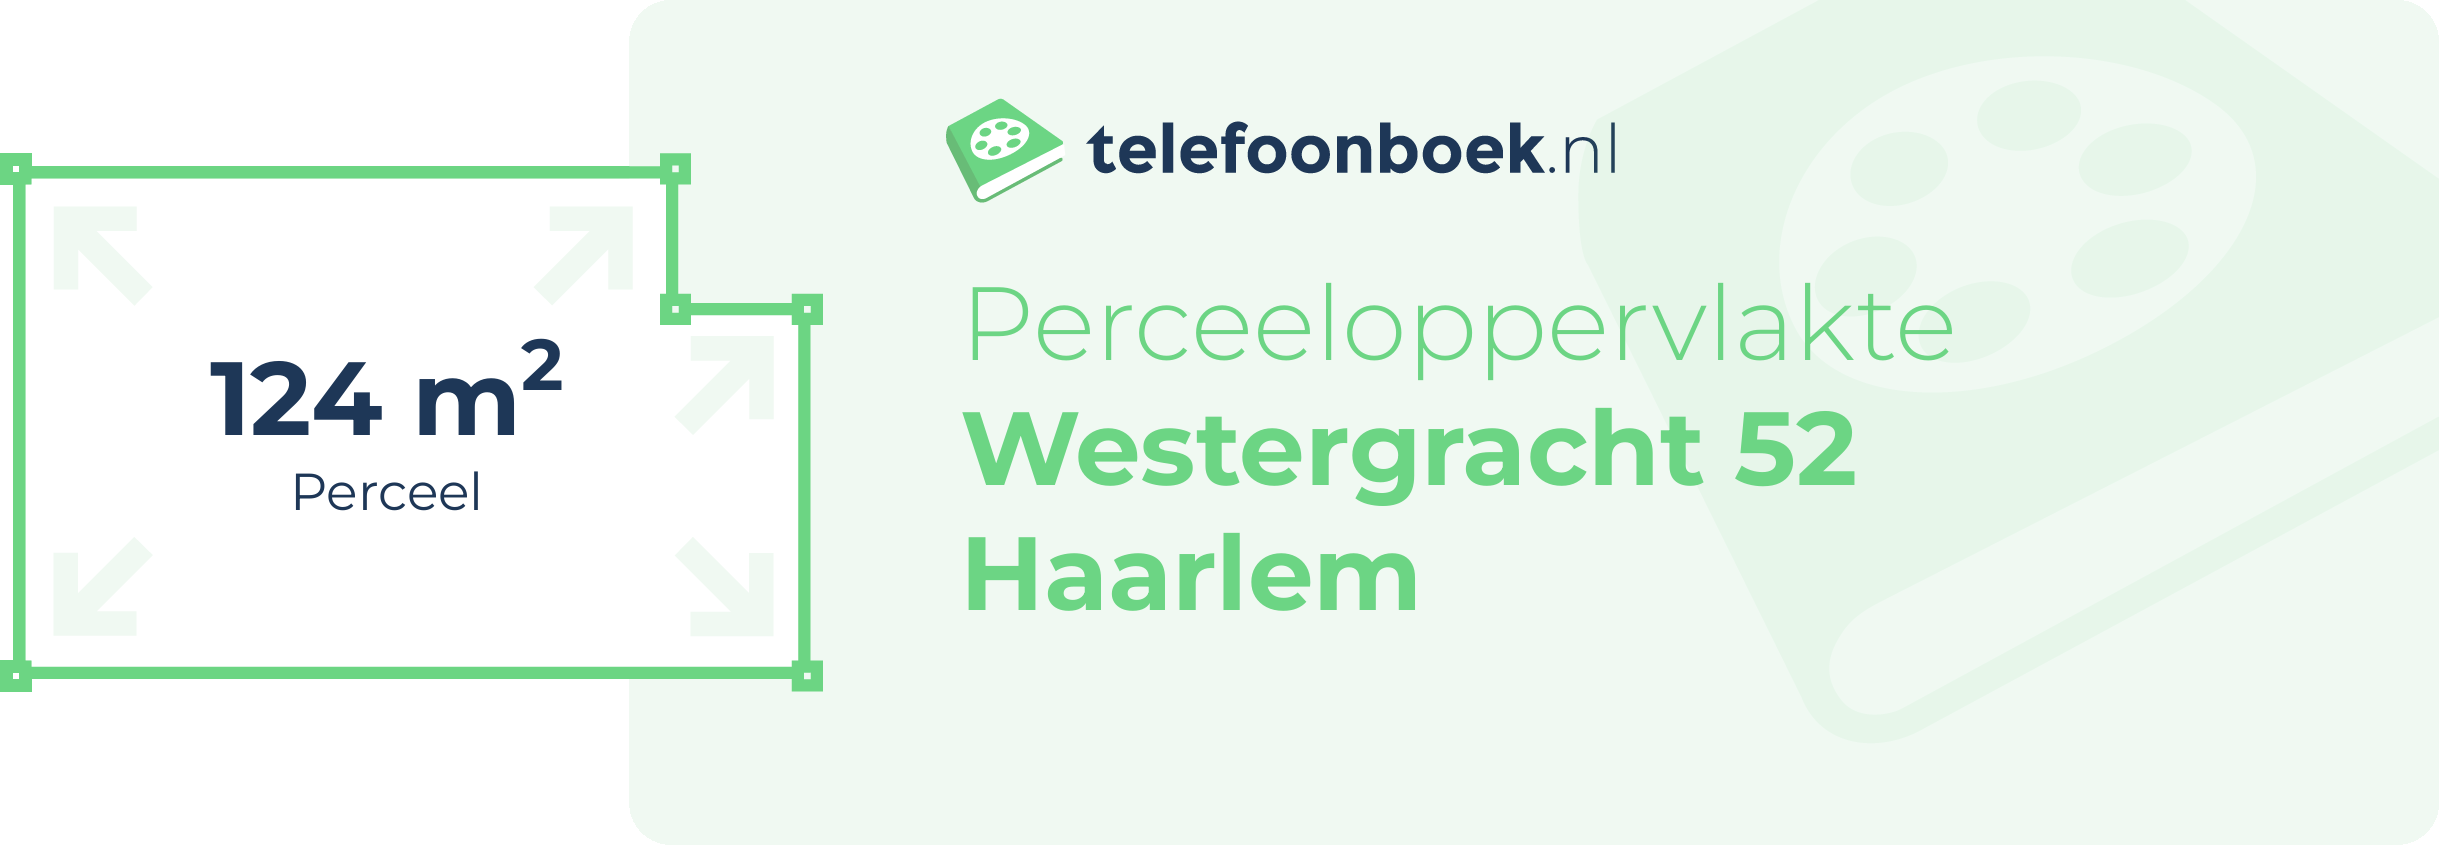 Perceeloppervlakte Westergracht 52 Haarlem